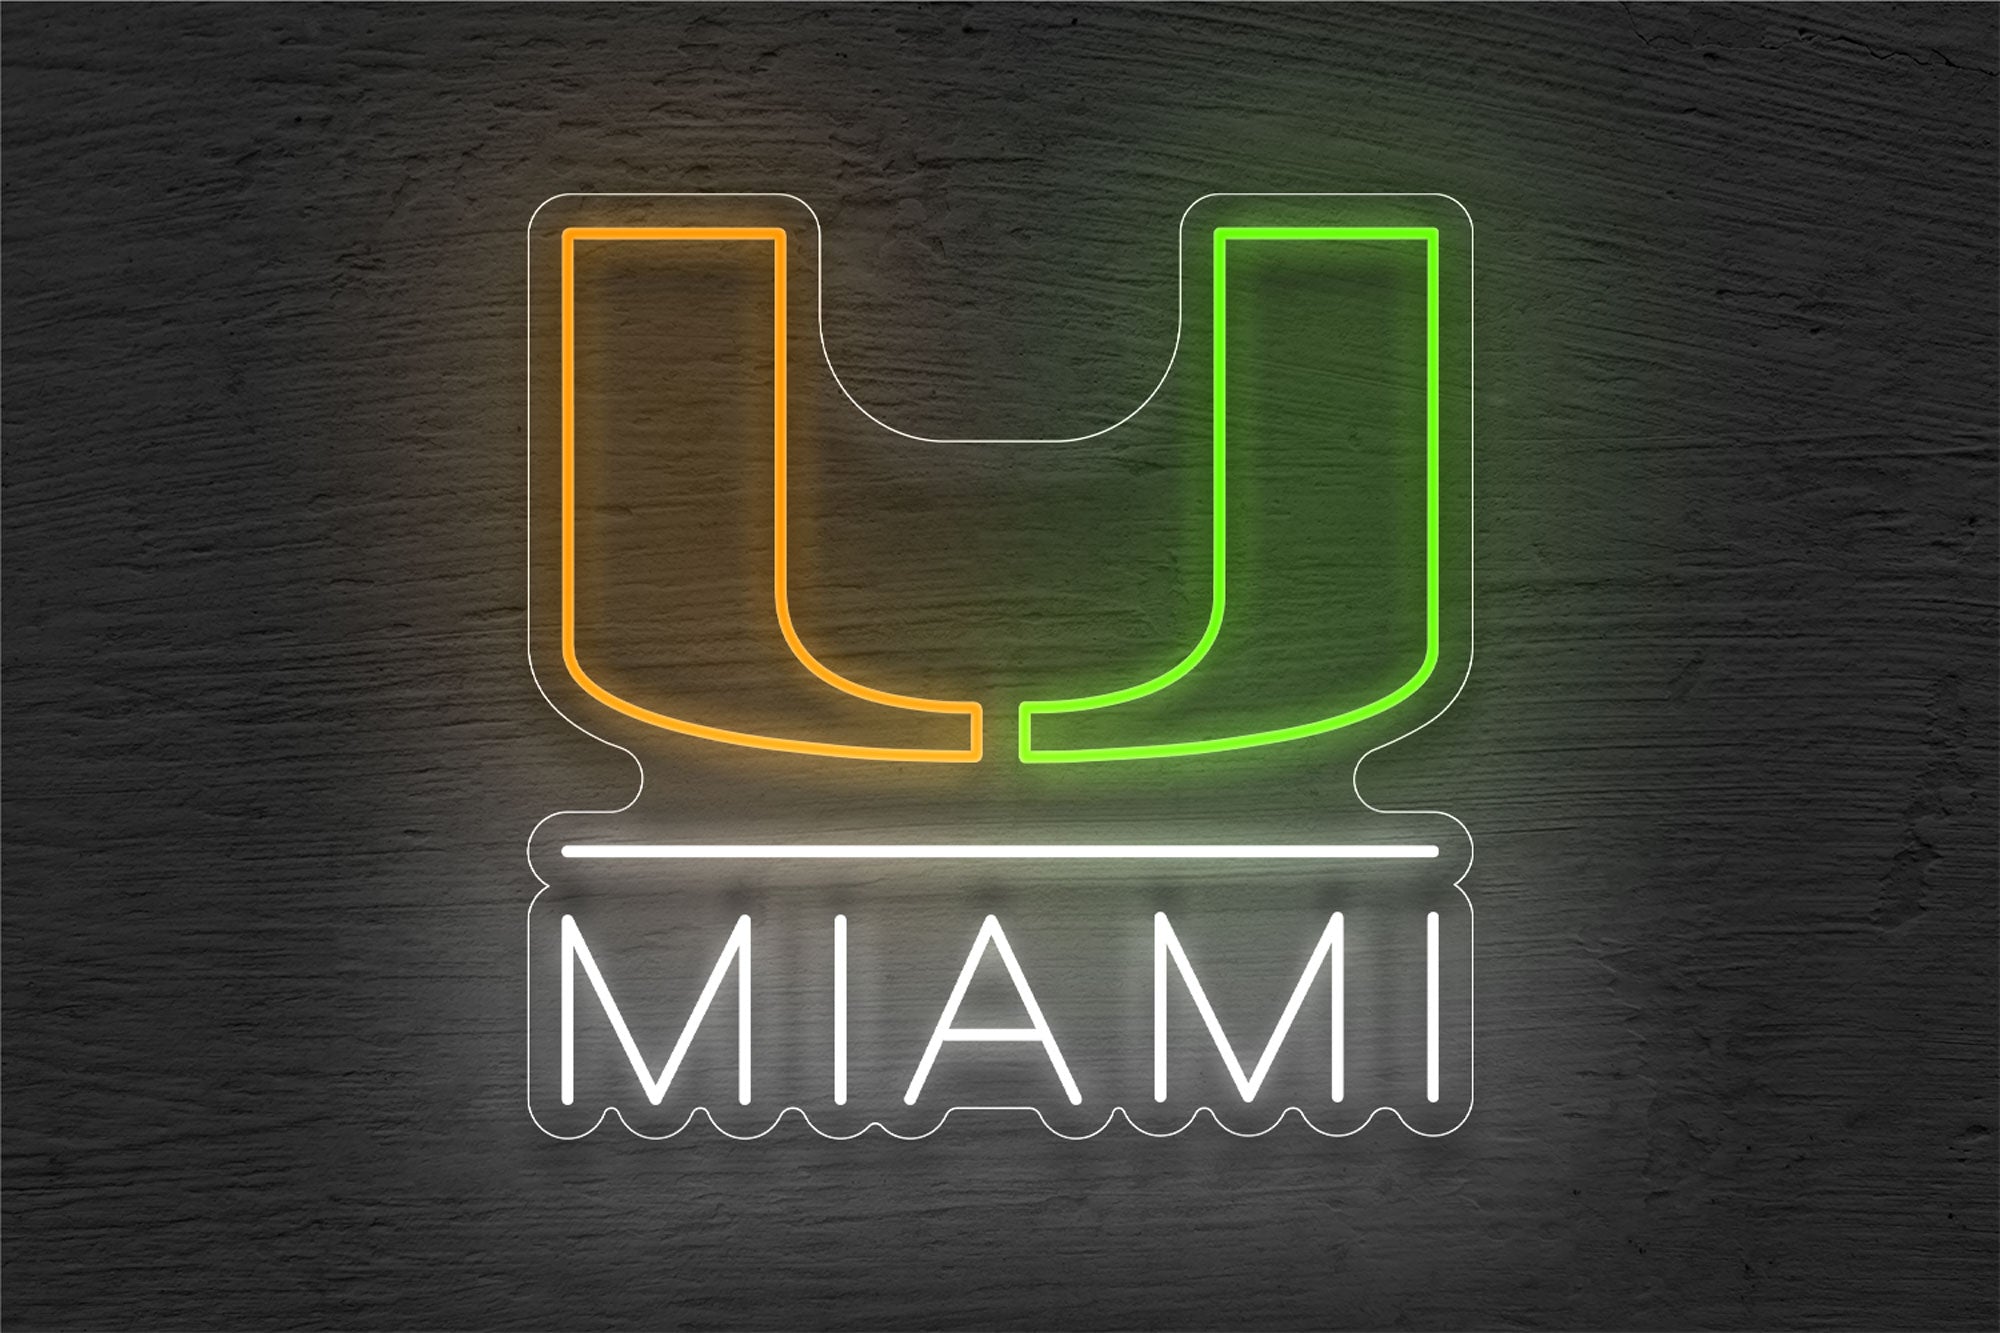 University of "Miami" LED Neon Sign